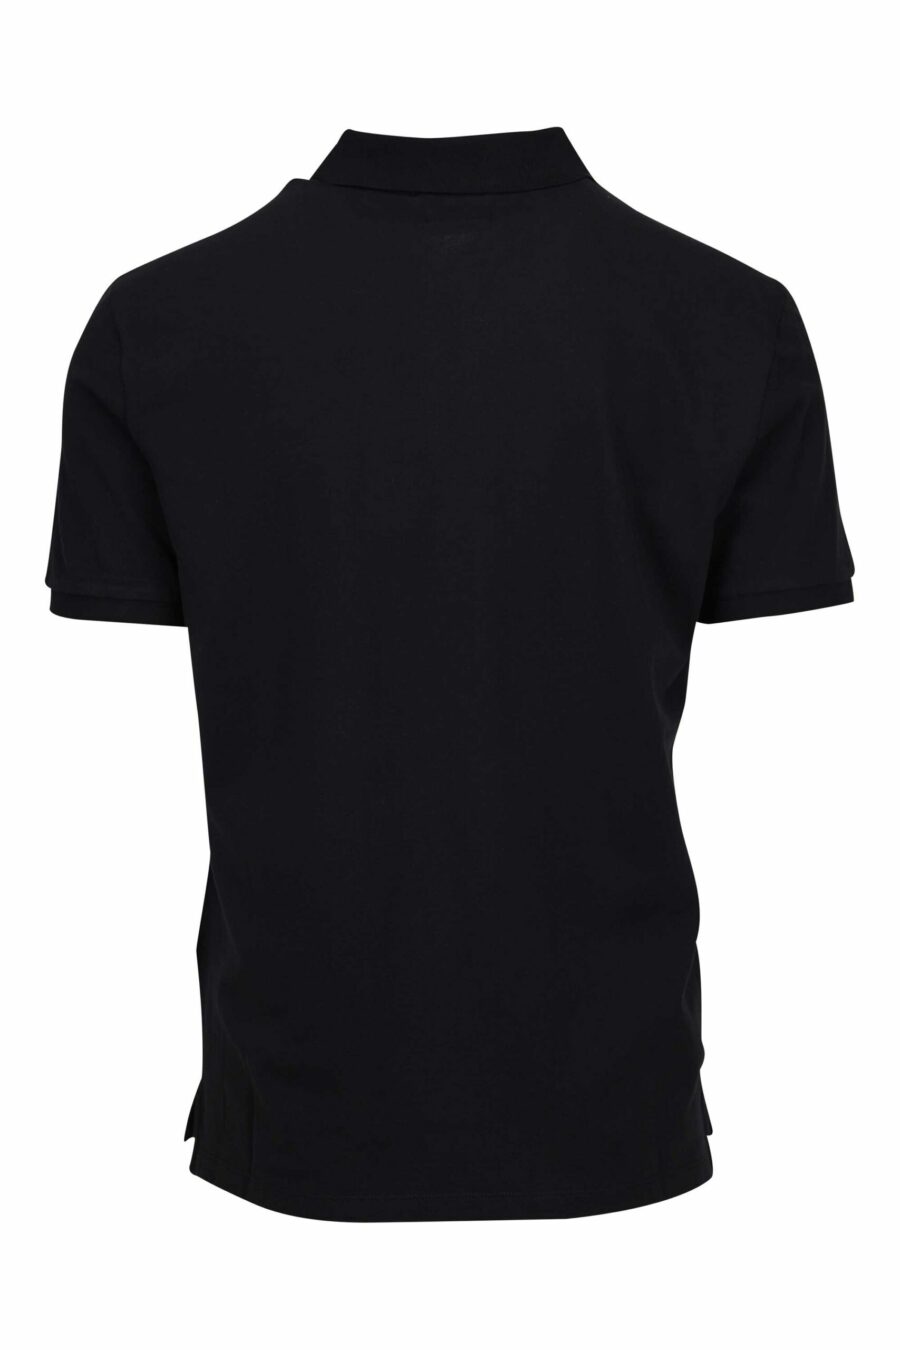 Schwarzes Poloshirt mit Mini-Logoaufnäher "cp" - 7620943728811 1 skaliert